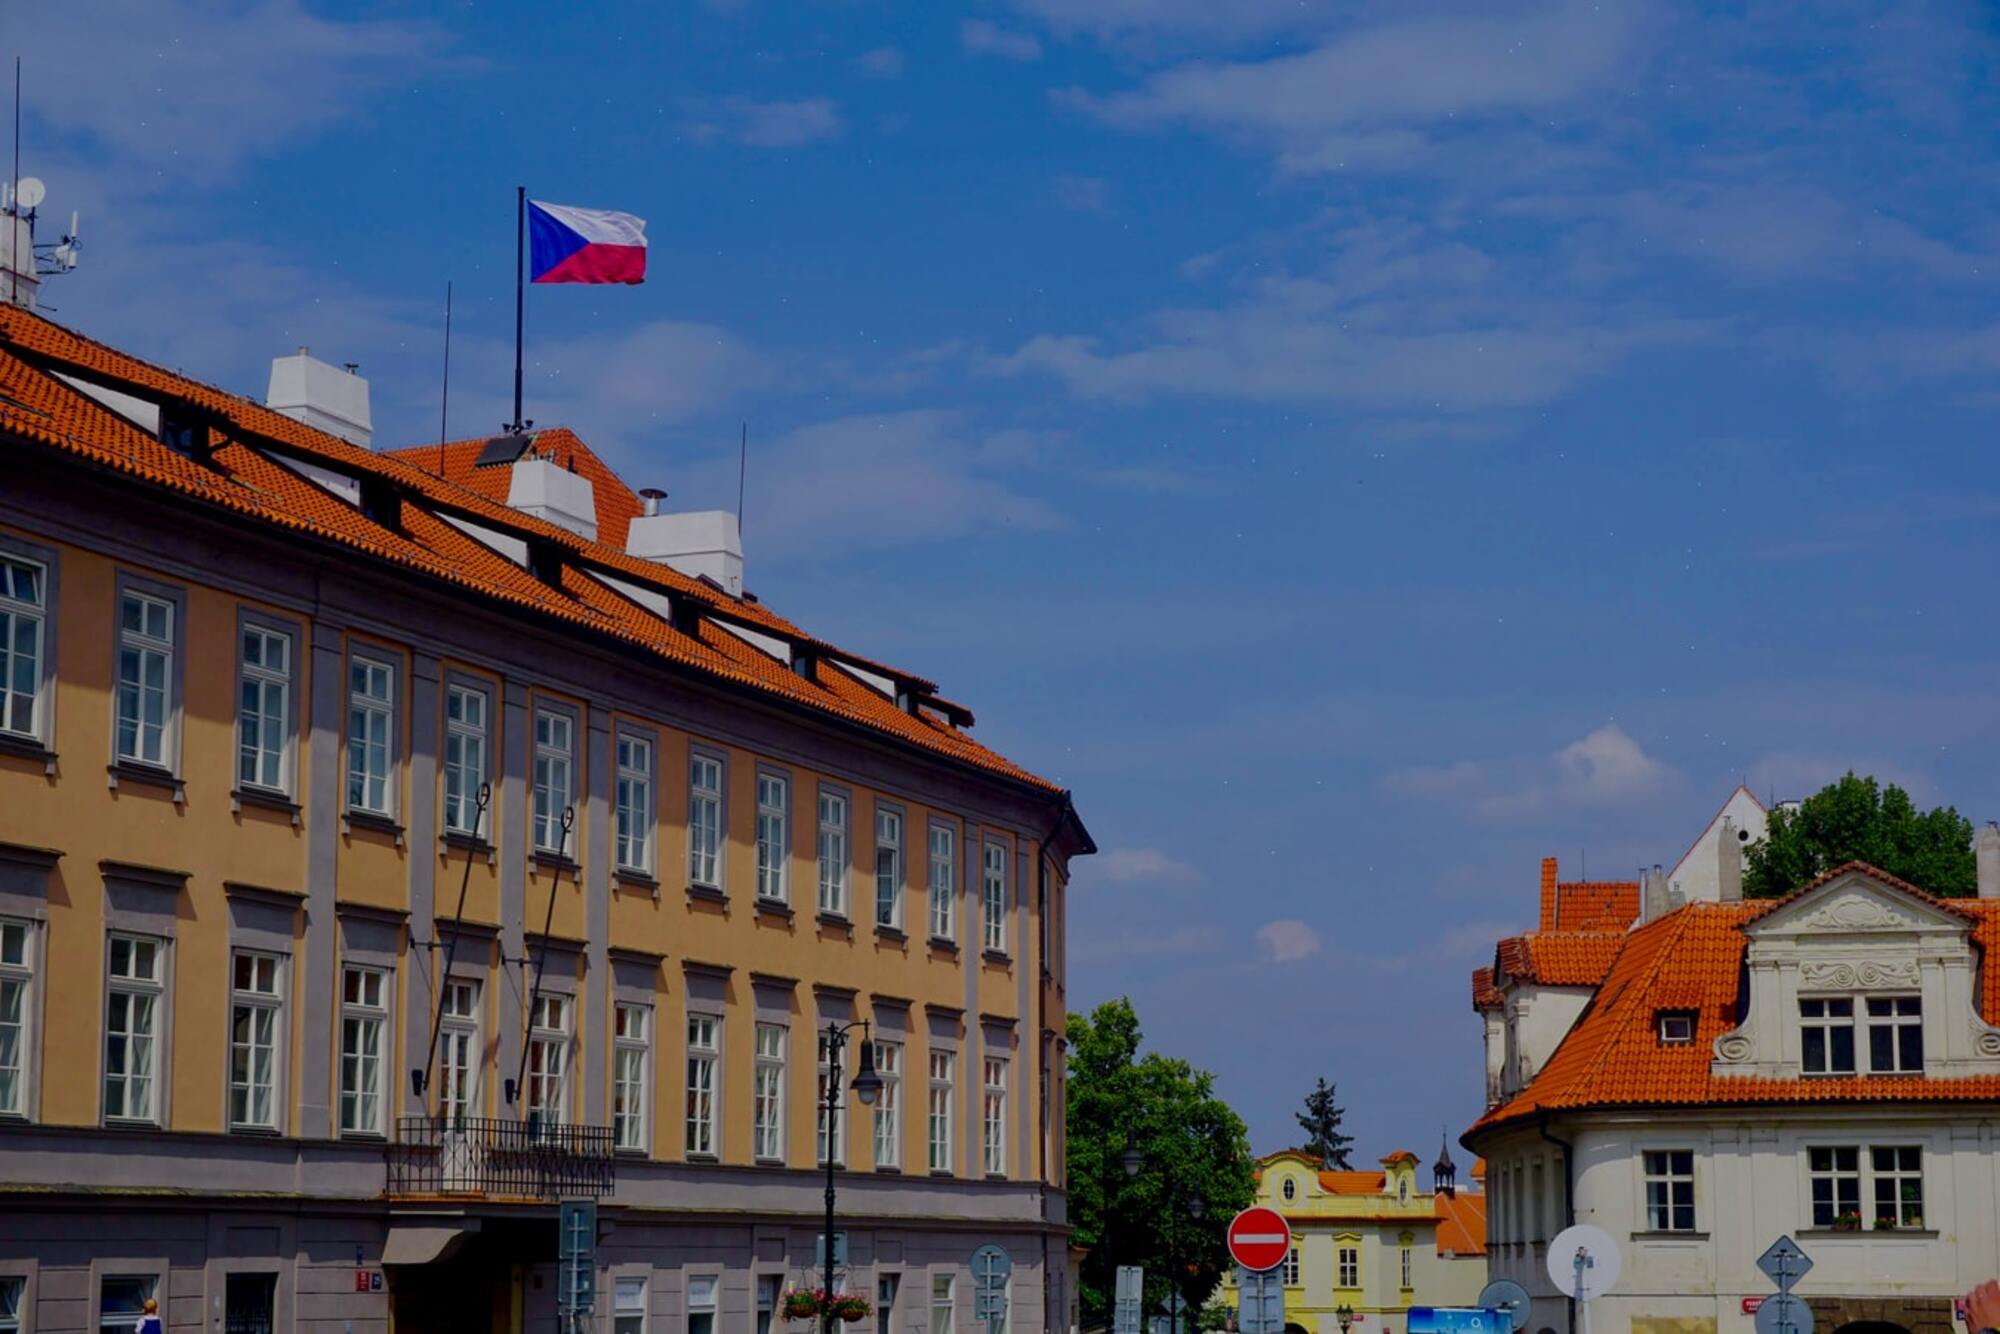 Prague and flag of Czechia